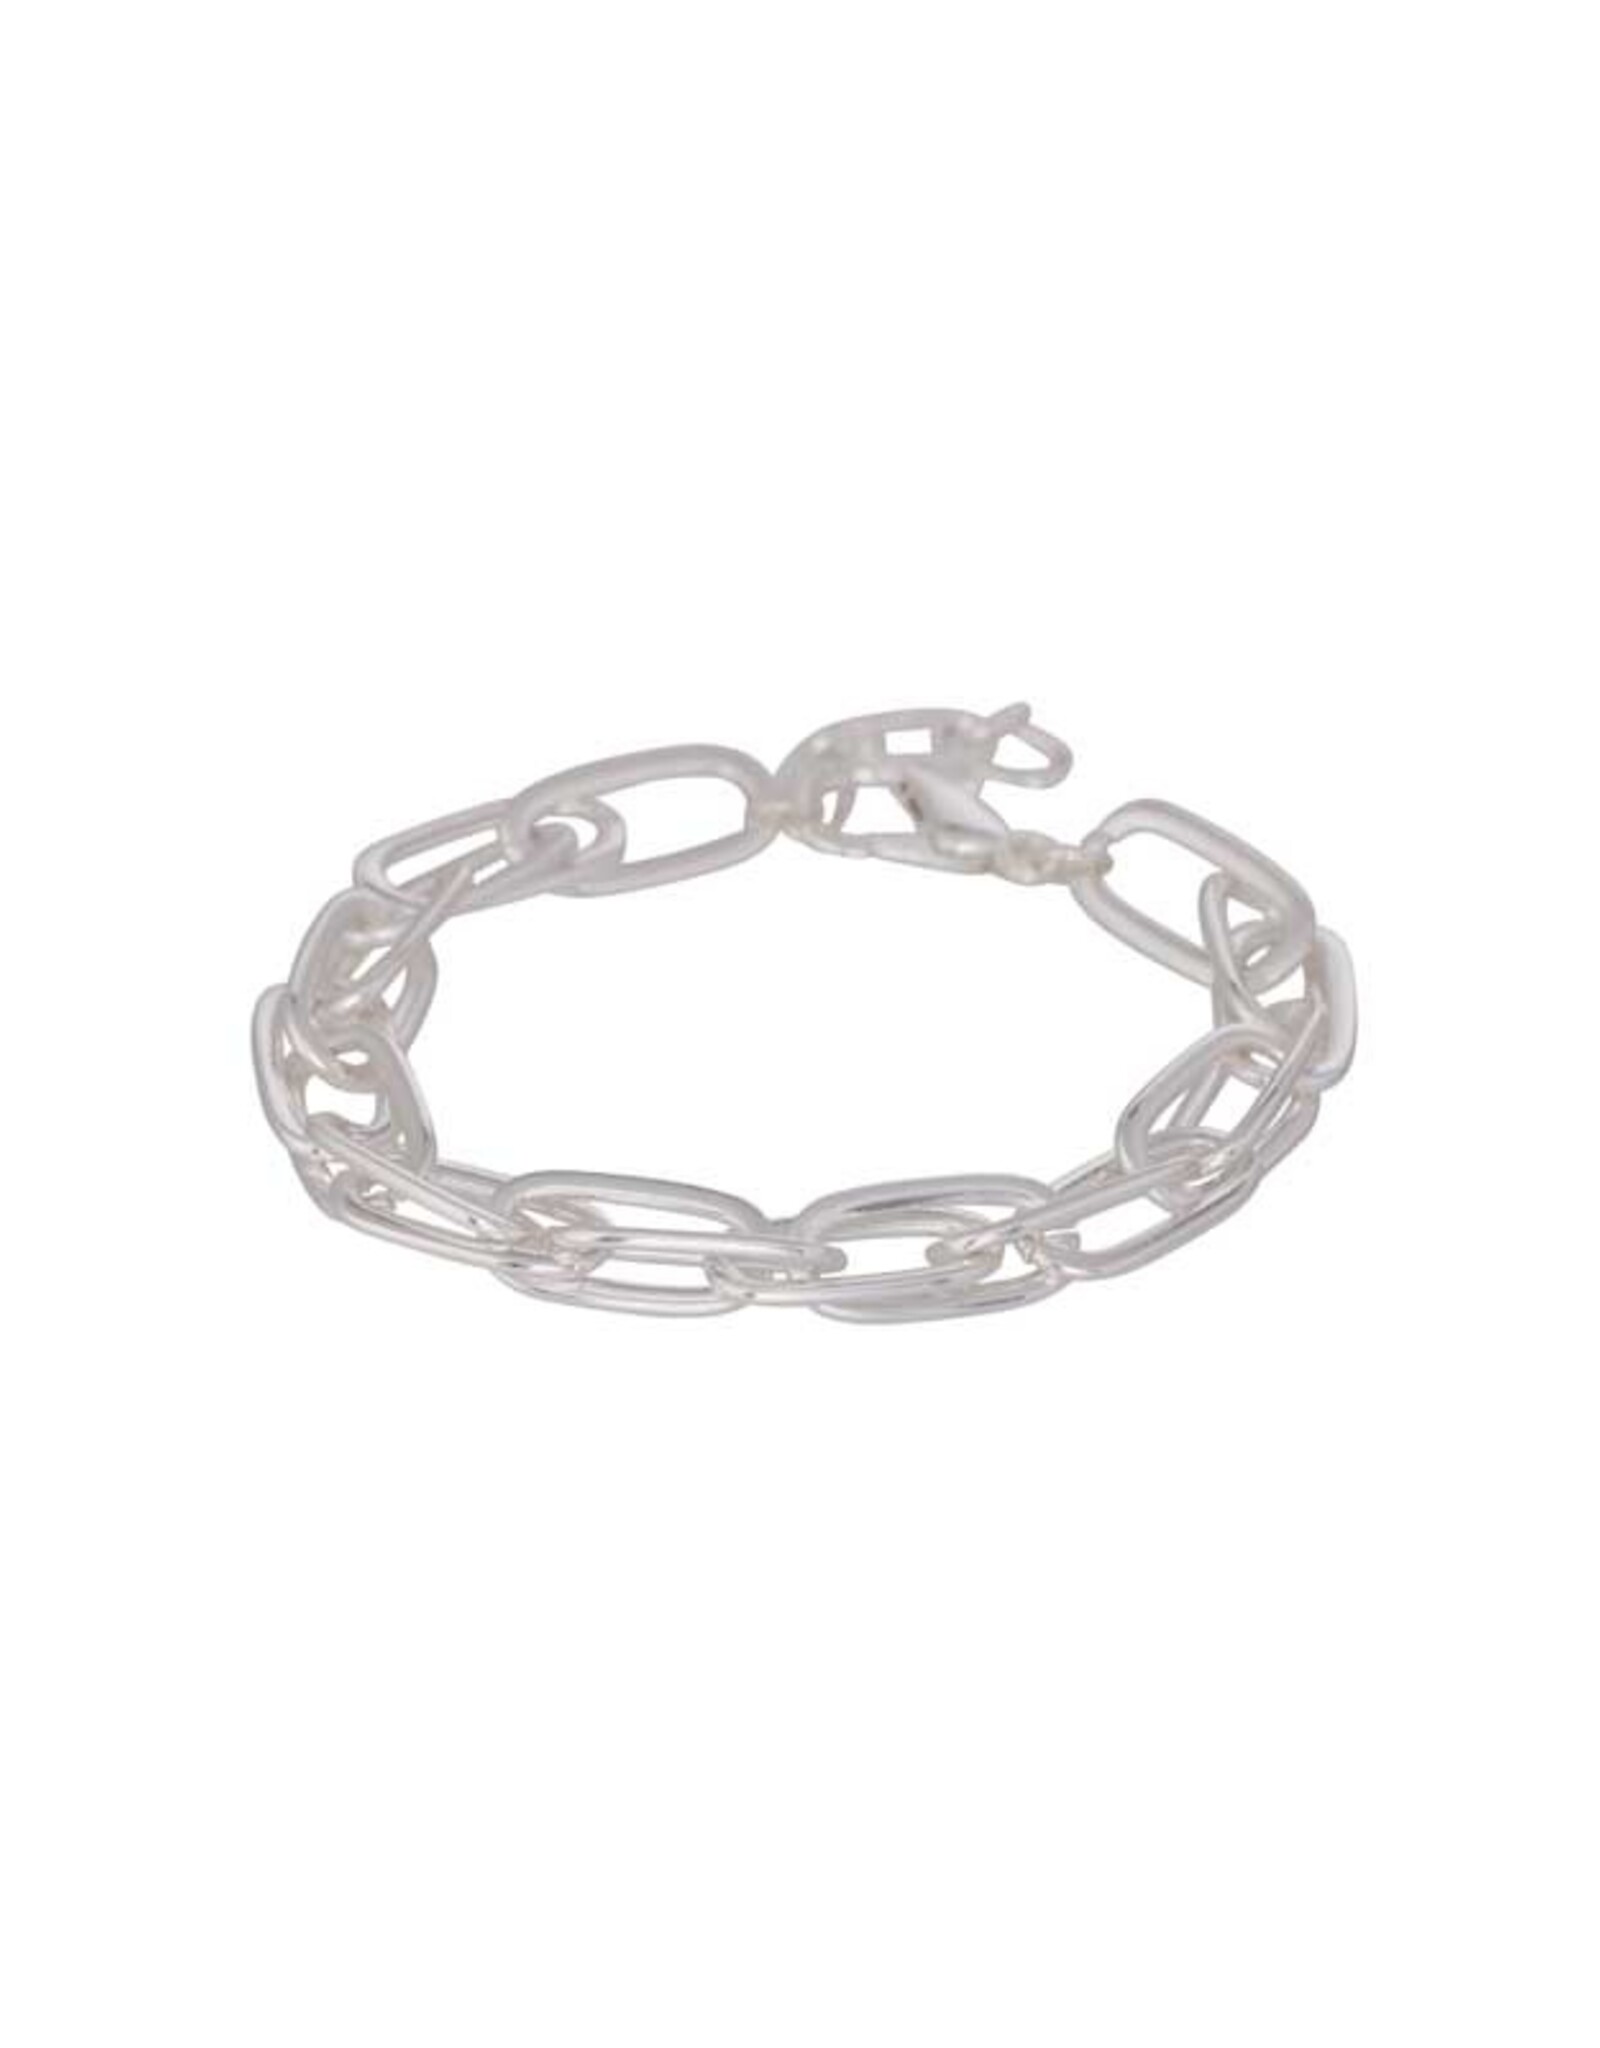 Merx Inc. Fashion Chain Bracelet Fancy Large Chain 19+2.5cm Silver